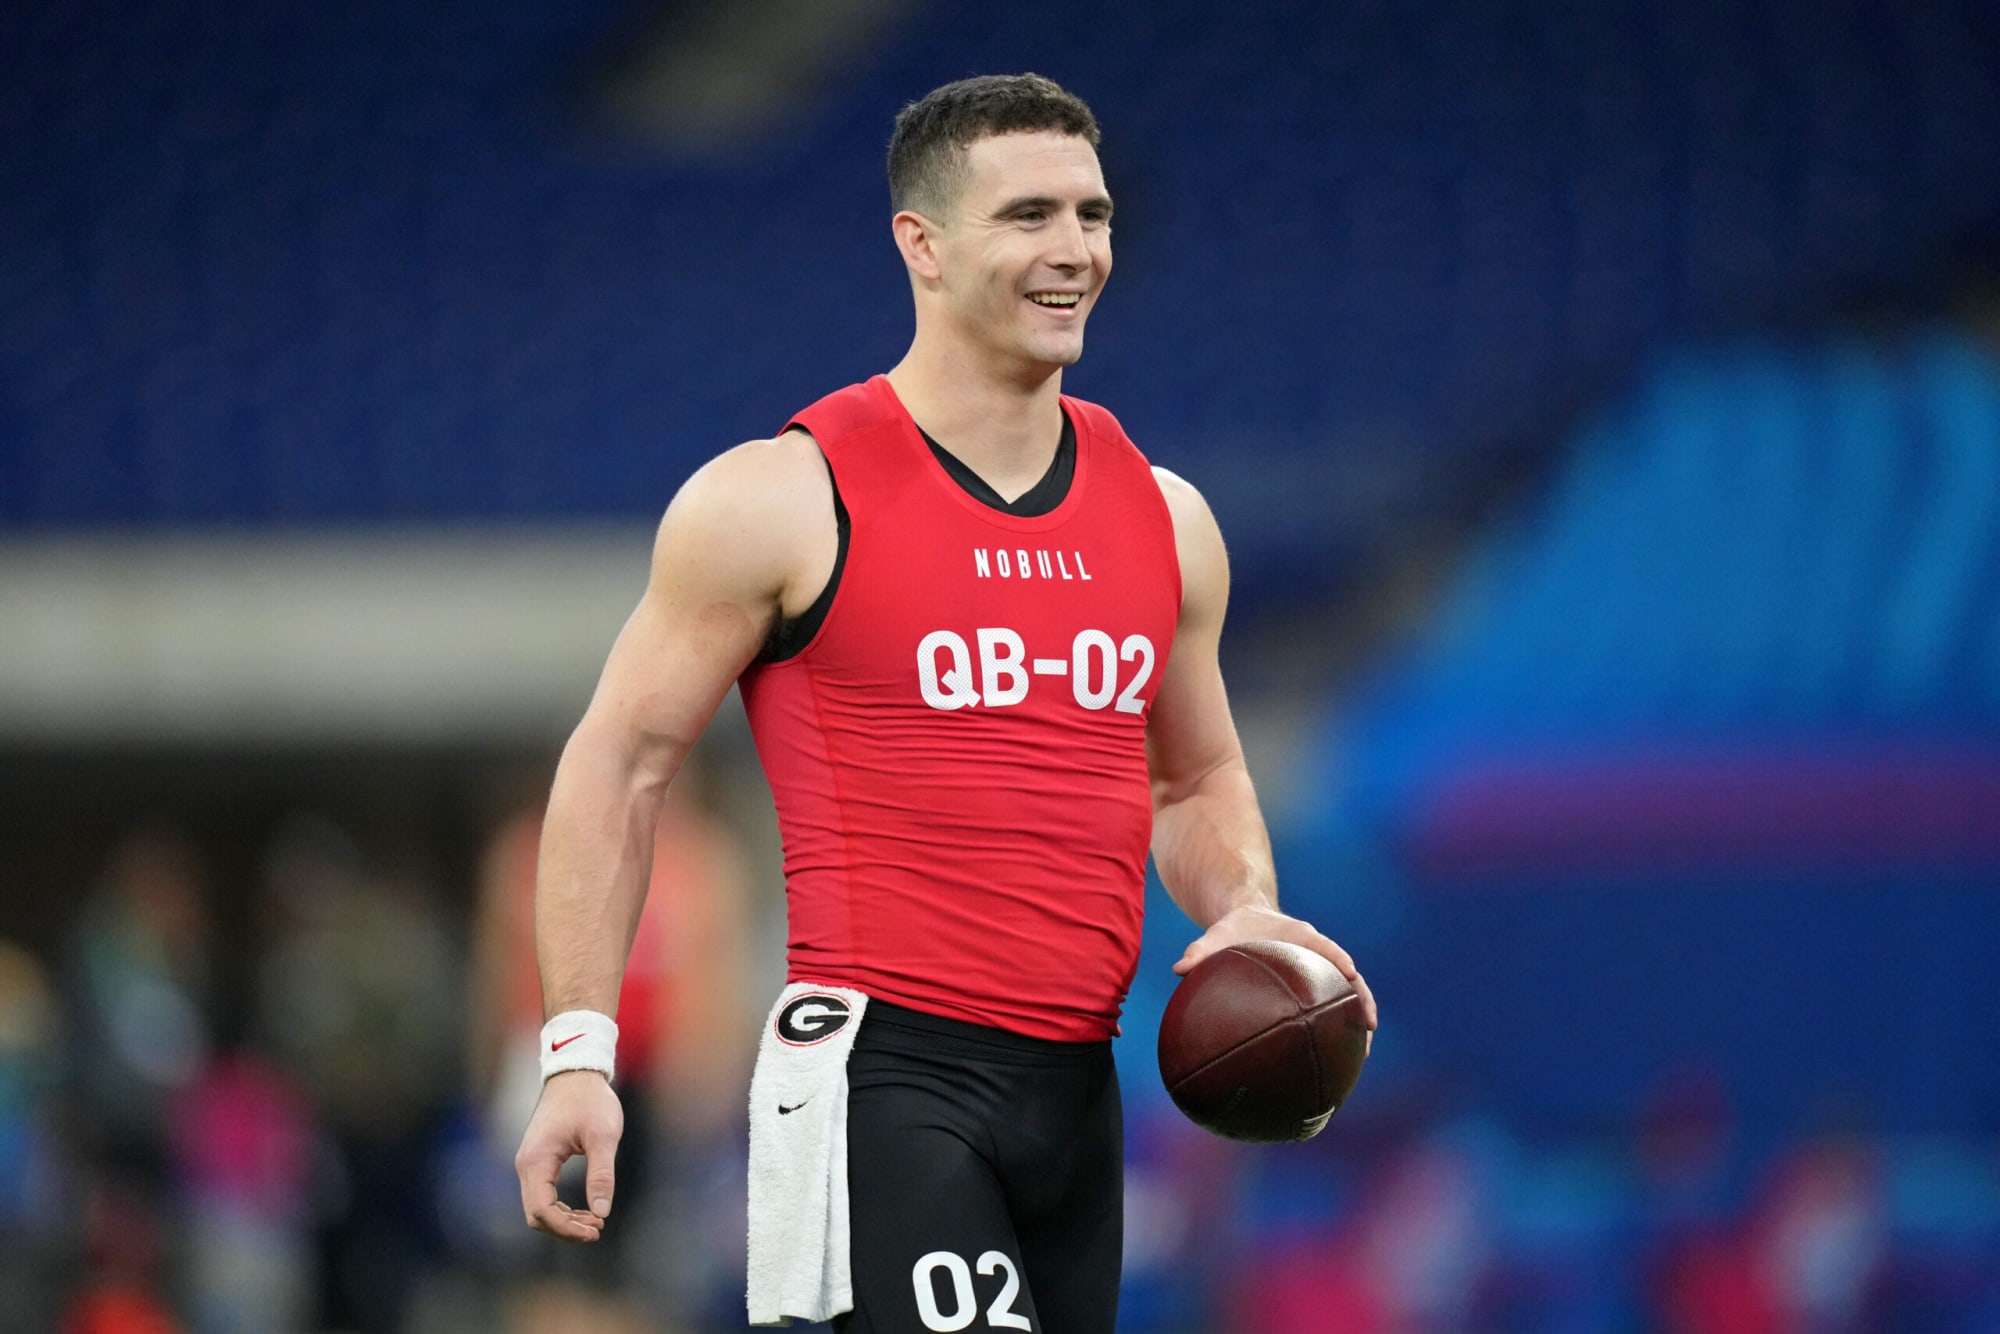 2023 NFL Draft odds: Will Georgia's Stetson Bennett get selected